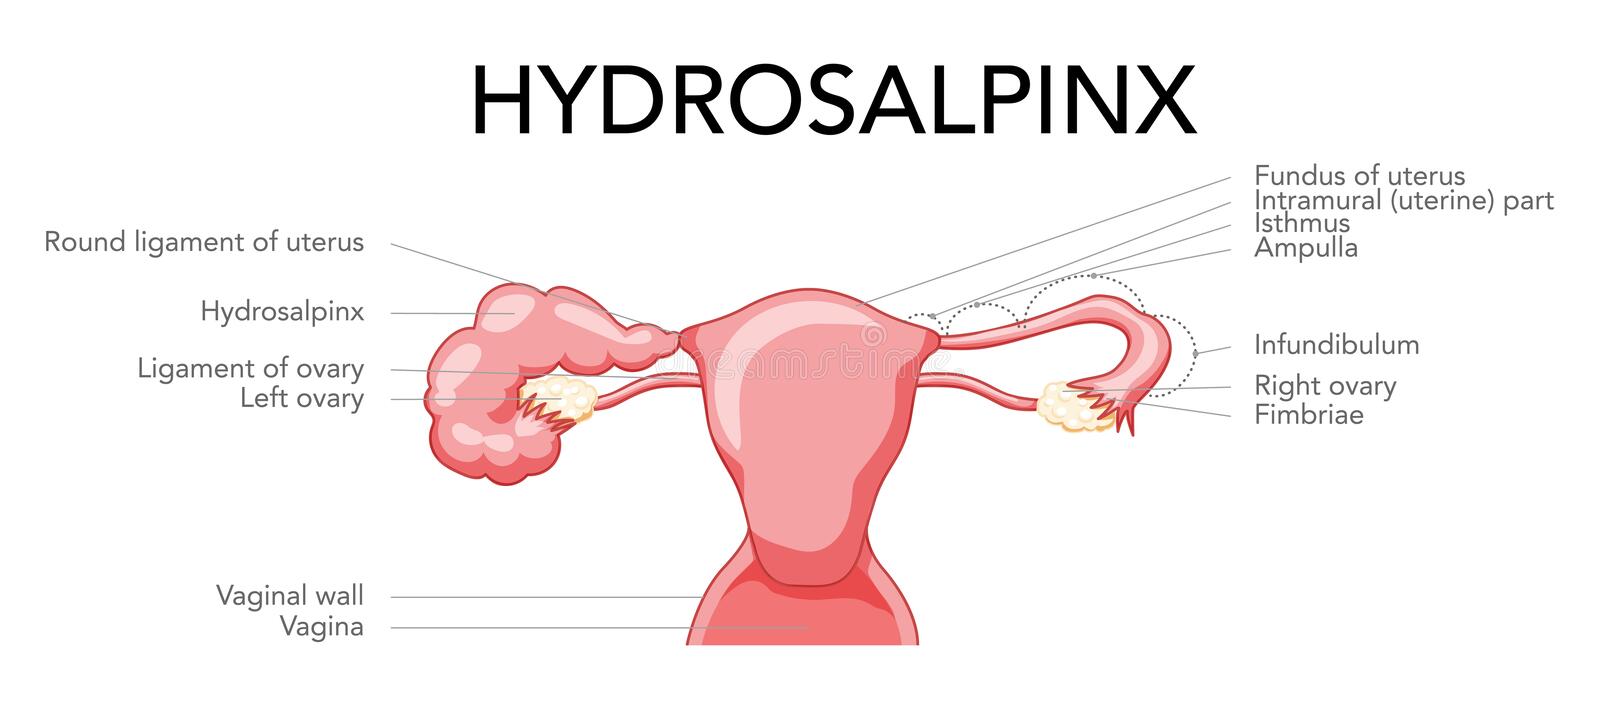 Hydrosalpinx: causes, symptoms and ayurvedic treatment-Aasha Ayurveda